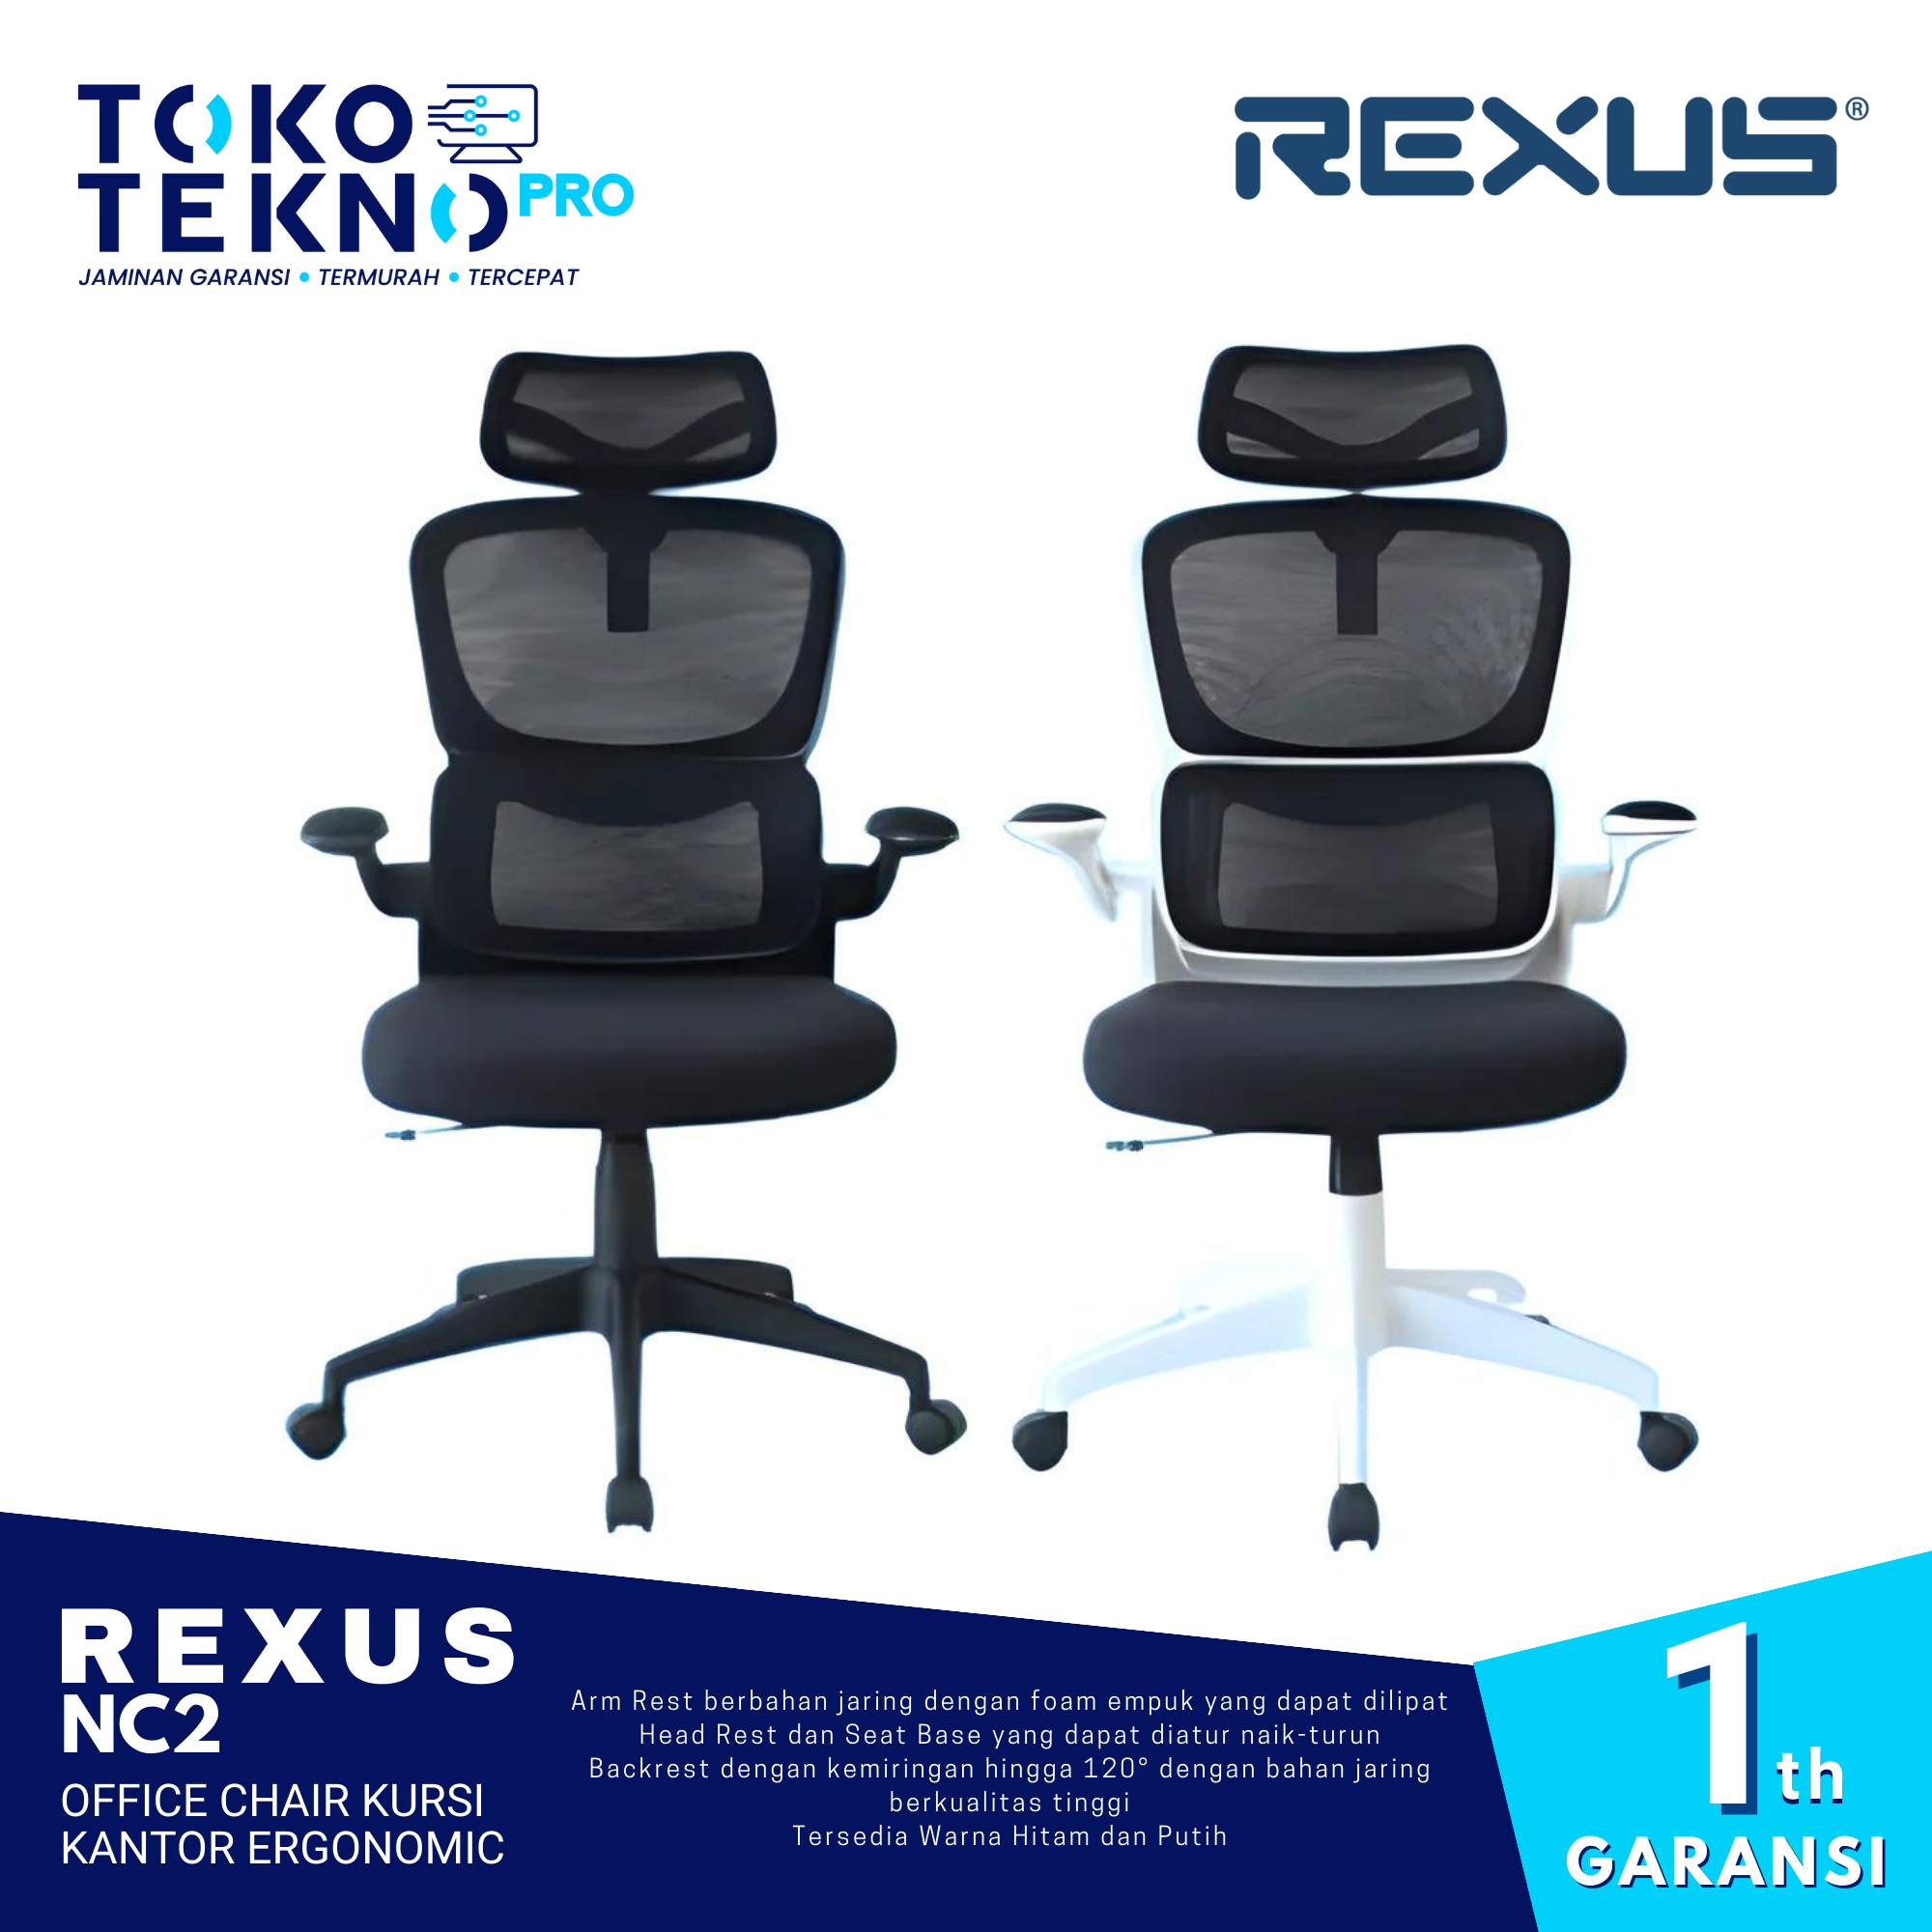 Rexus NC2 Office Chair Kursi Kantor Ergonomic